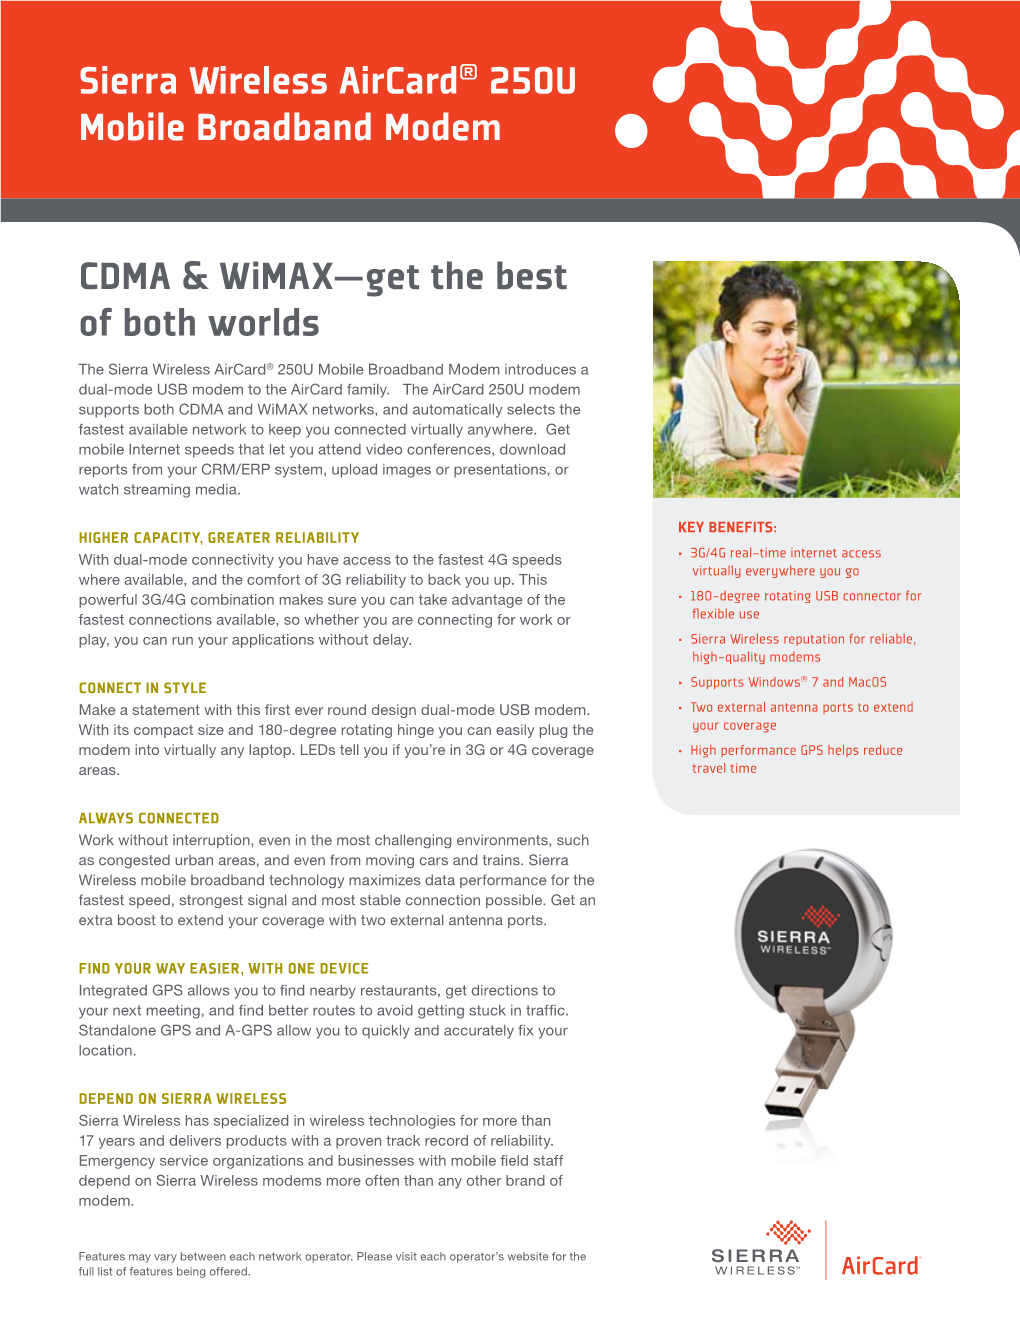 CDMA & Wimax—Get the Best of Both Worlds Sierra Wireless Aircard® 250U Mobile Broadband Modem